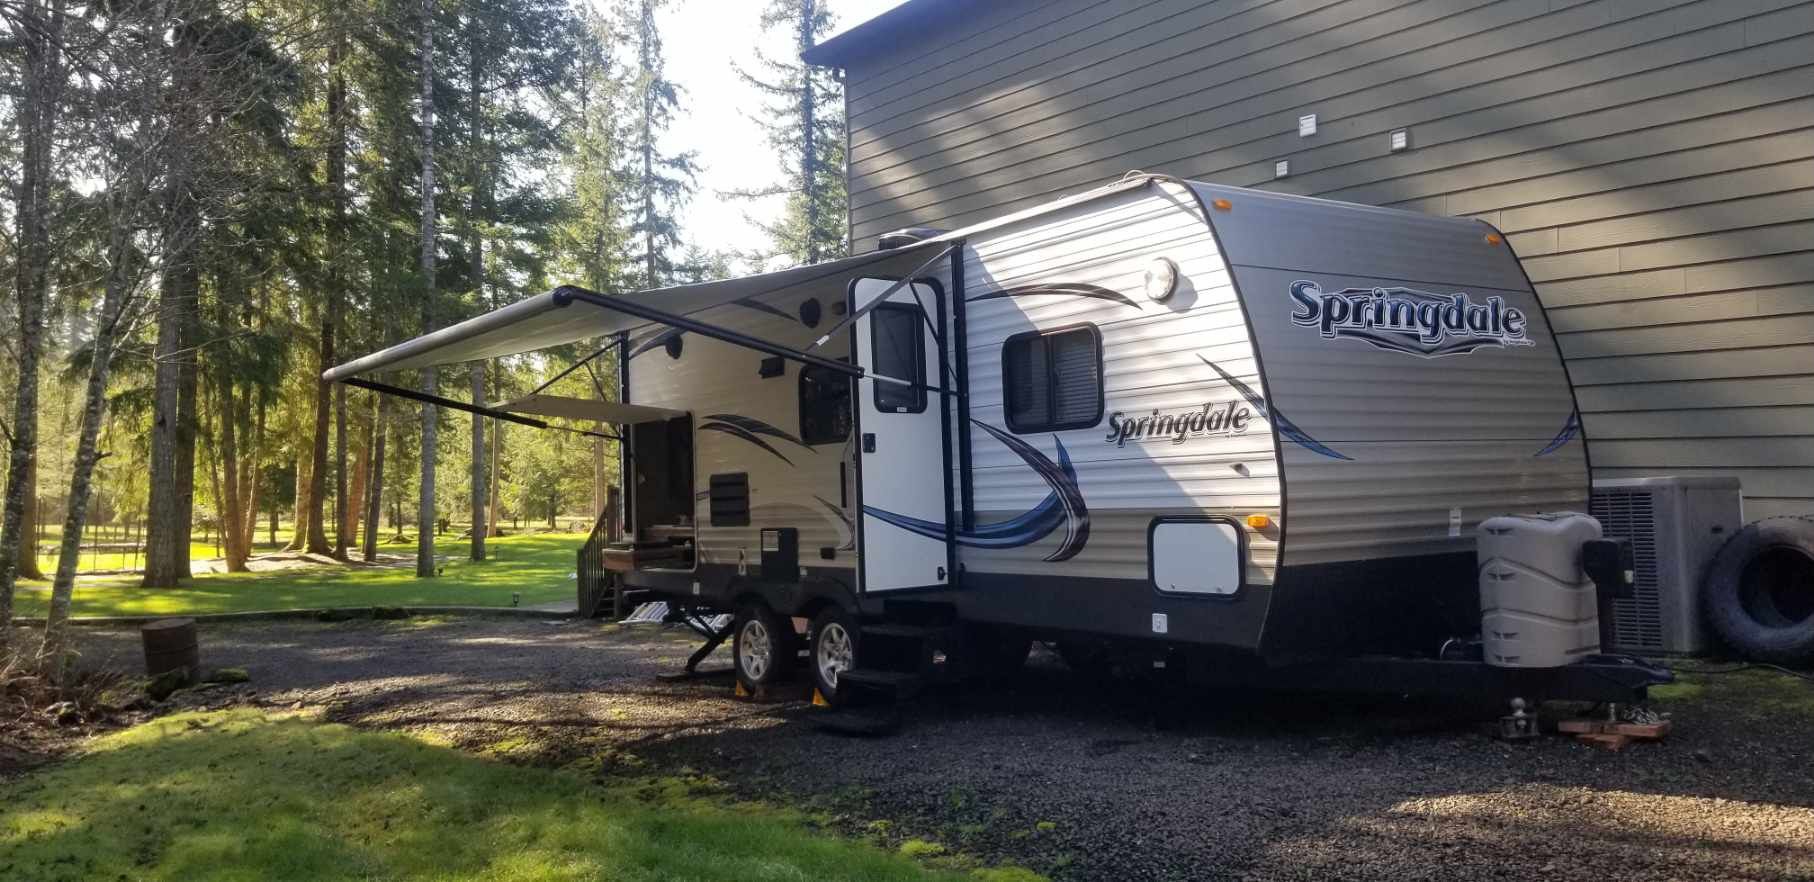 2014 Keystone Springdale camper trailer RV